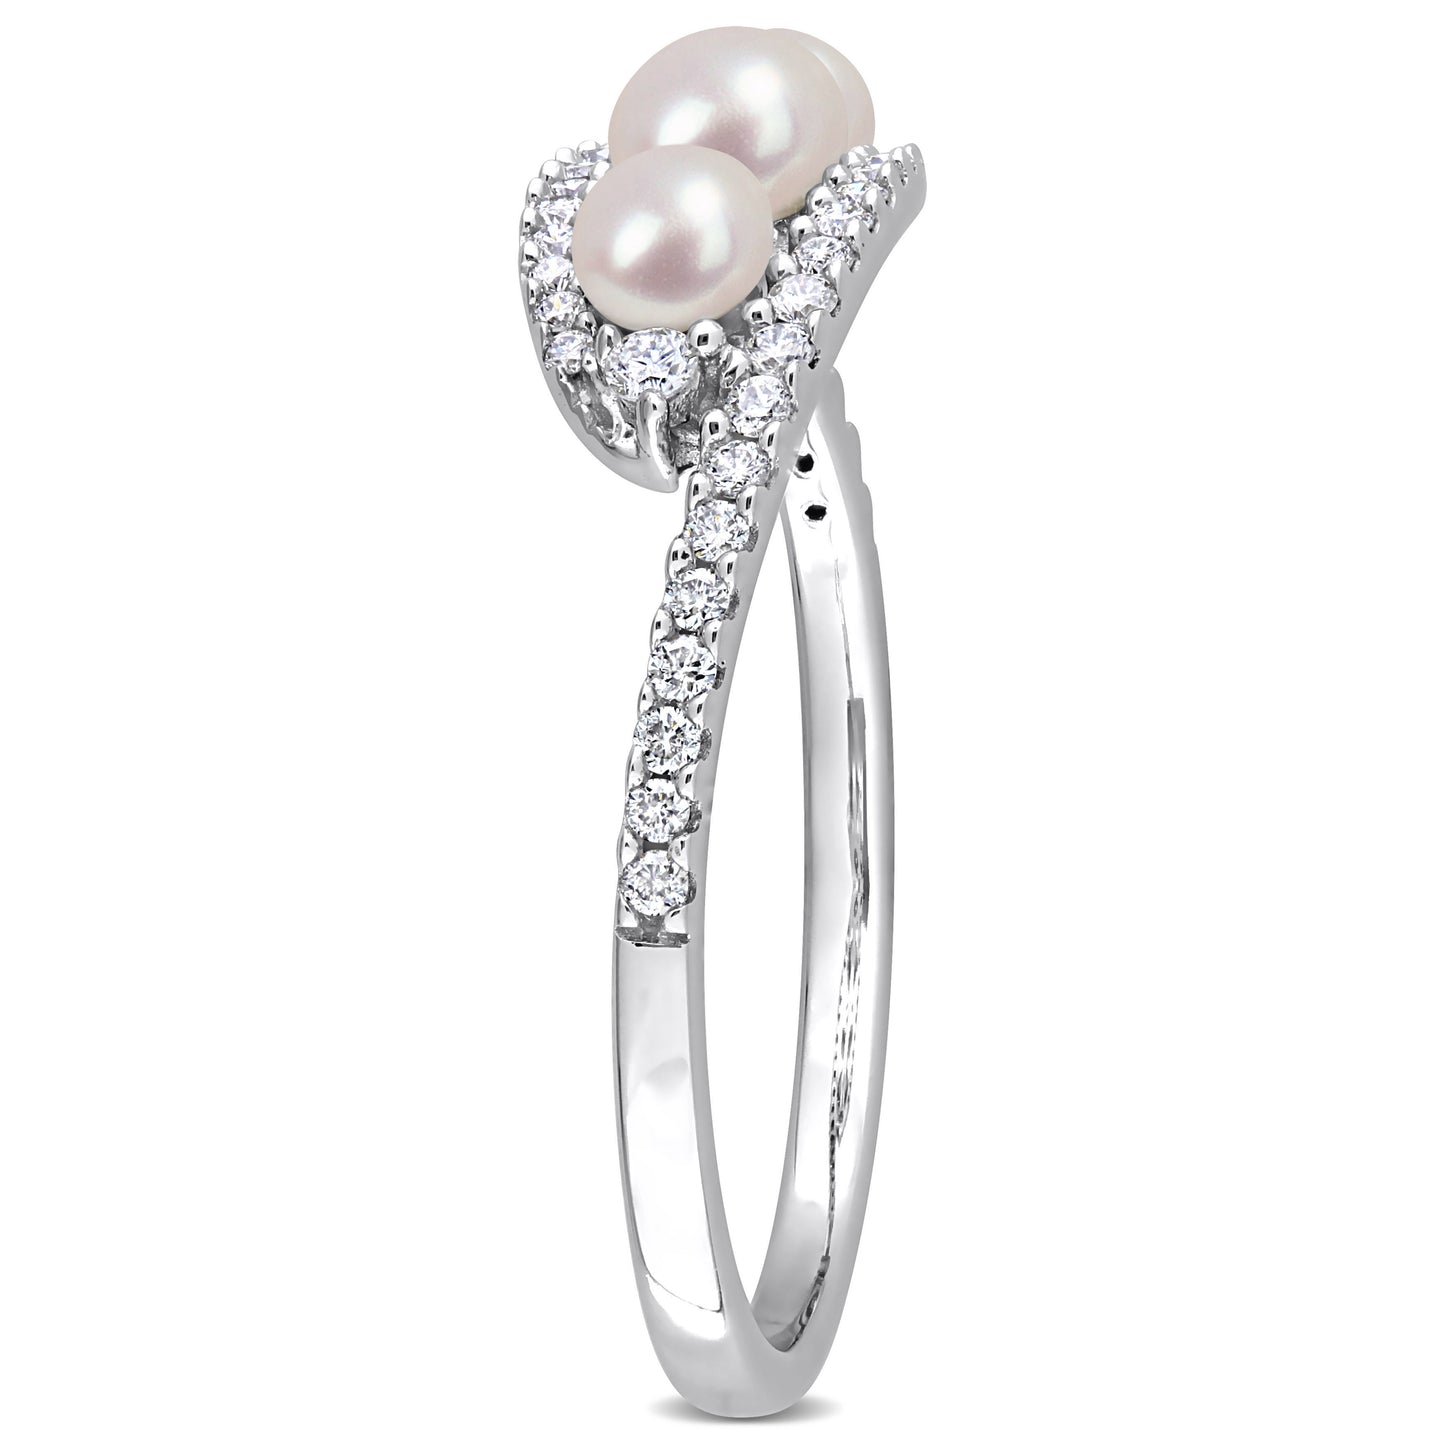 3-Pearl & Diamond Ring 14k White Gold